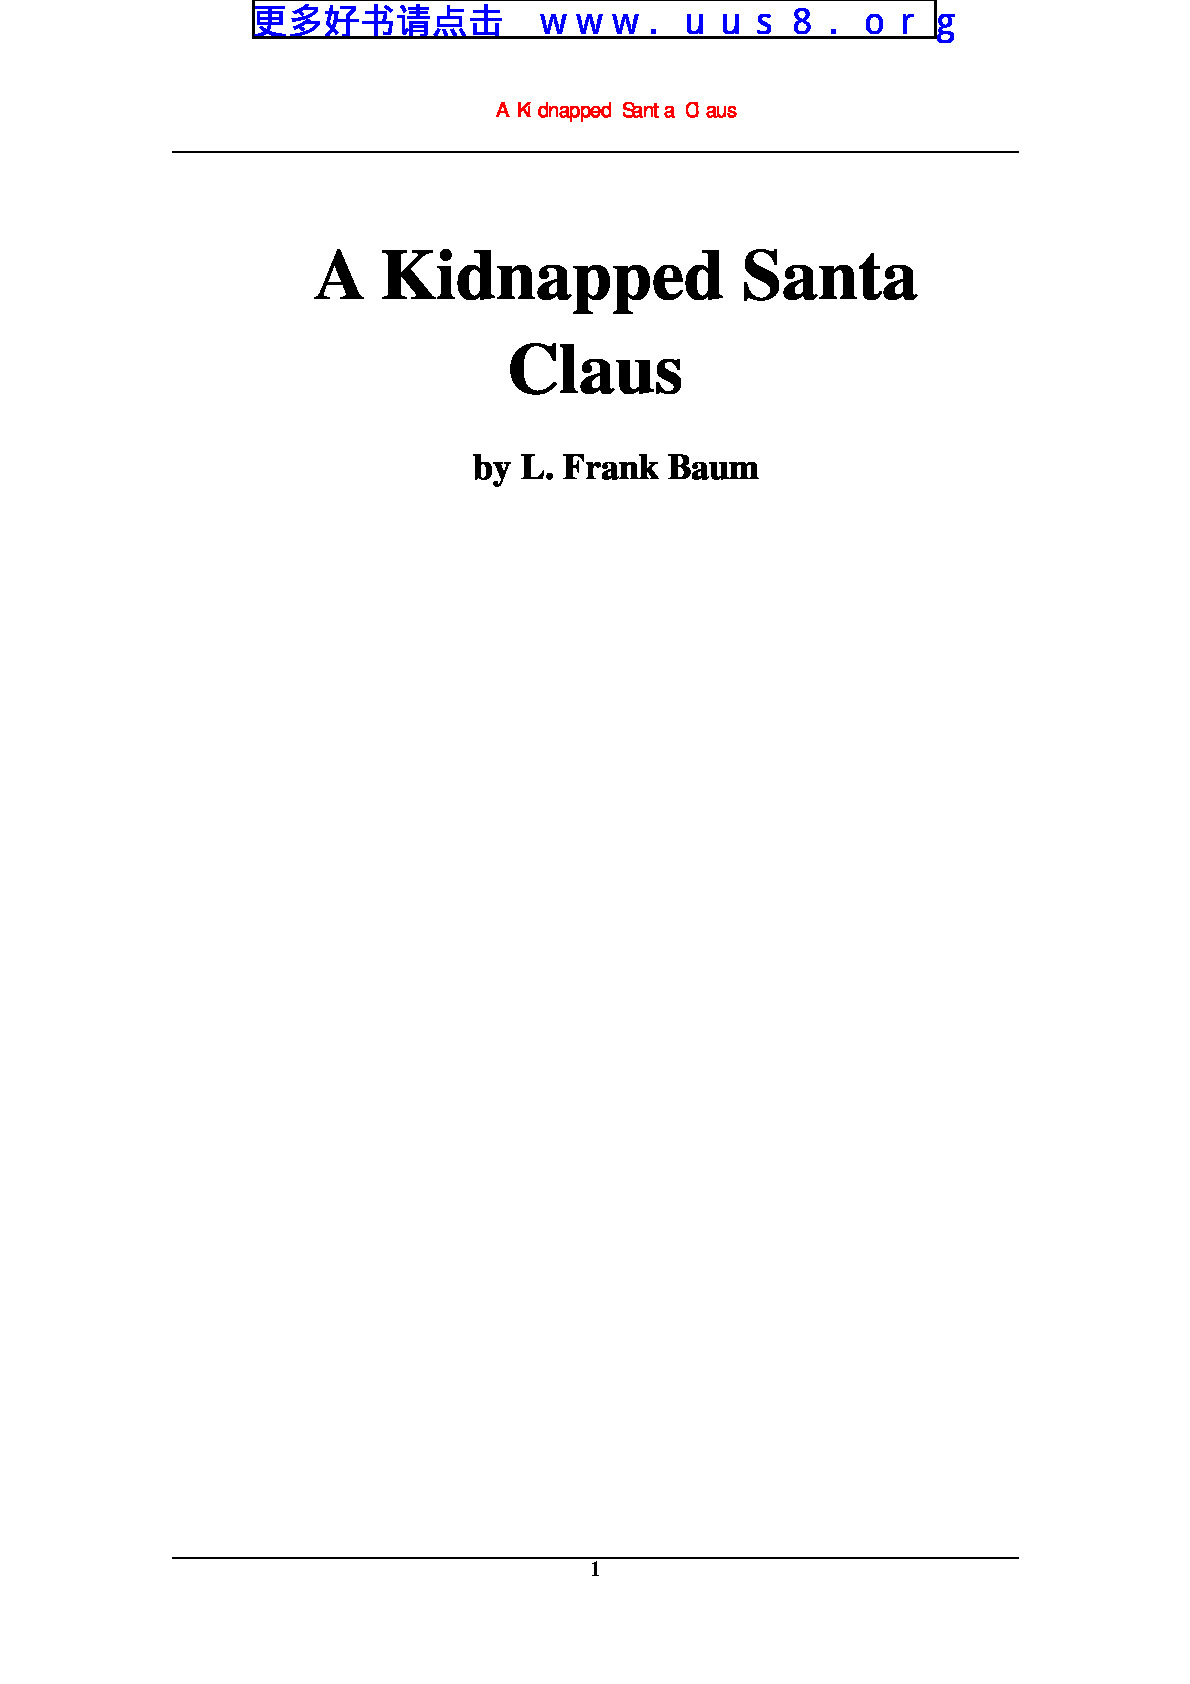 a_kidnapped_santa_claus(圣诞老人被绑架)